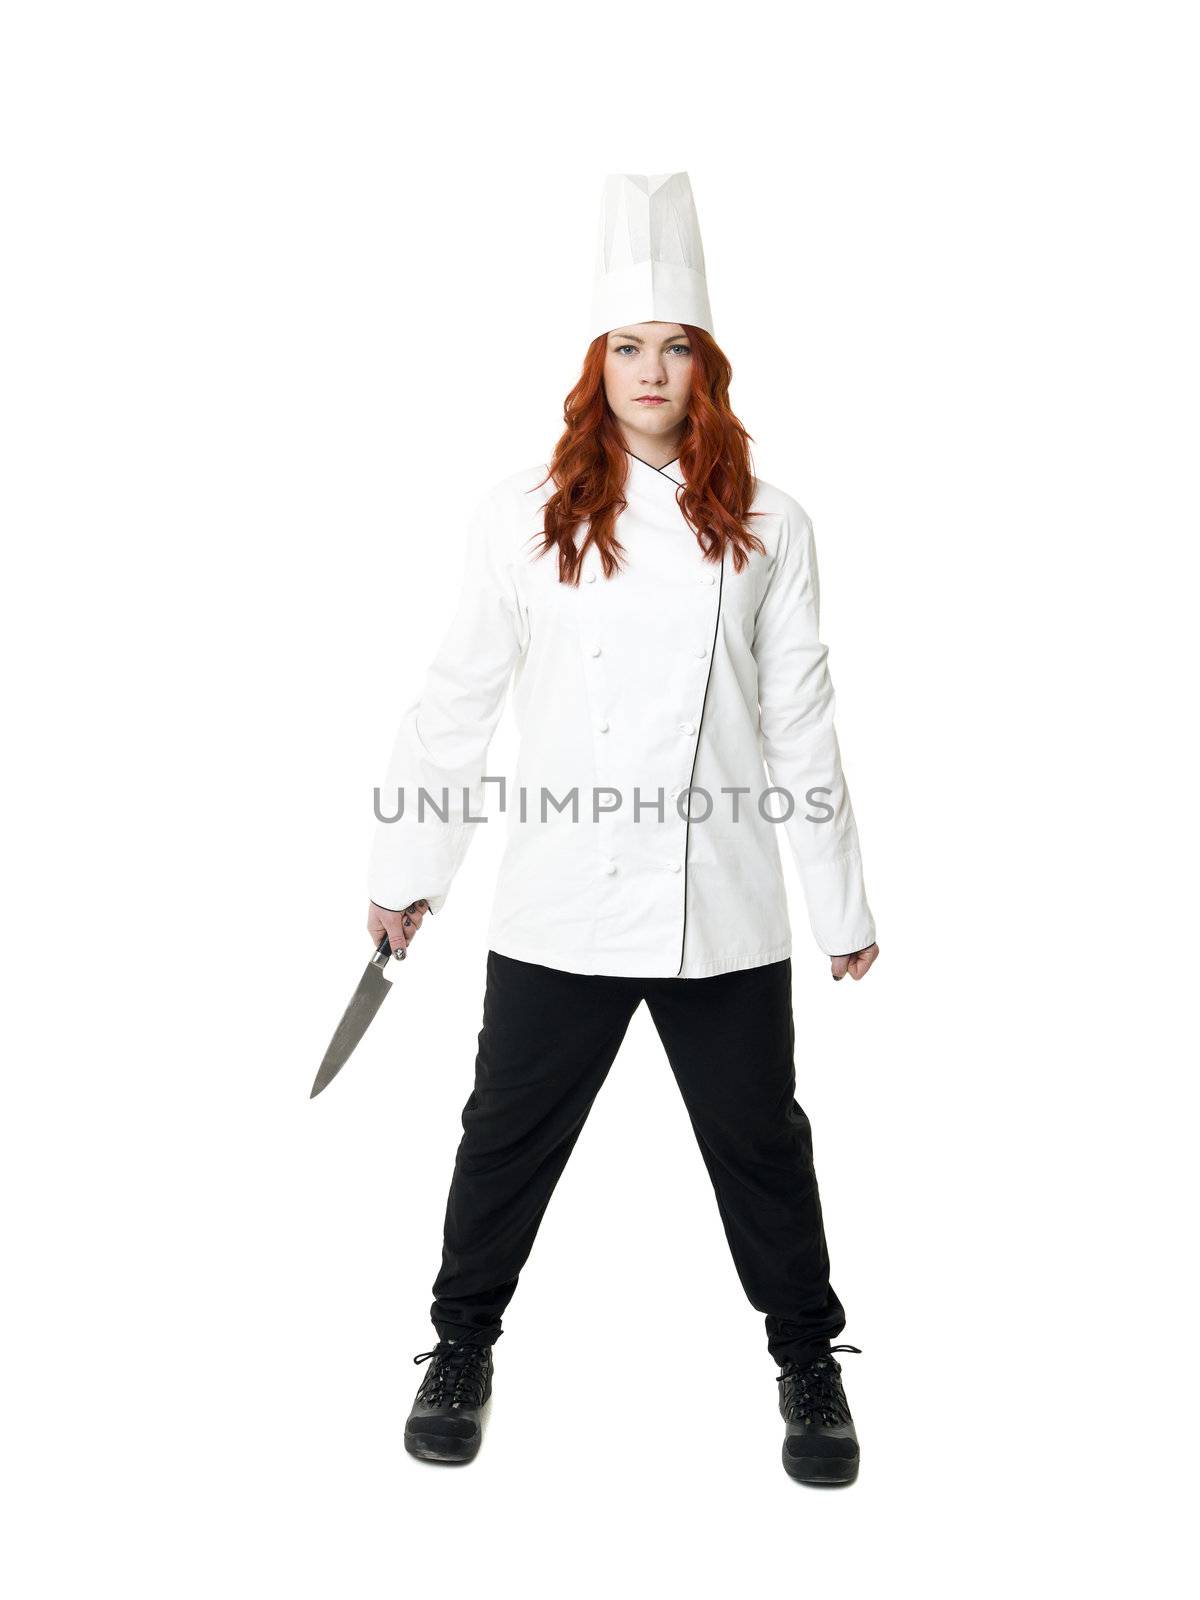 Female Chef isolated on white background